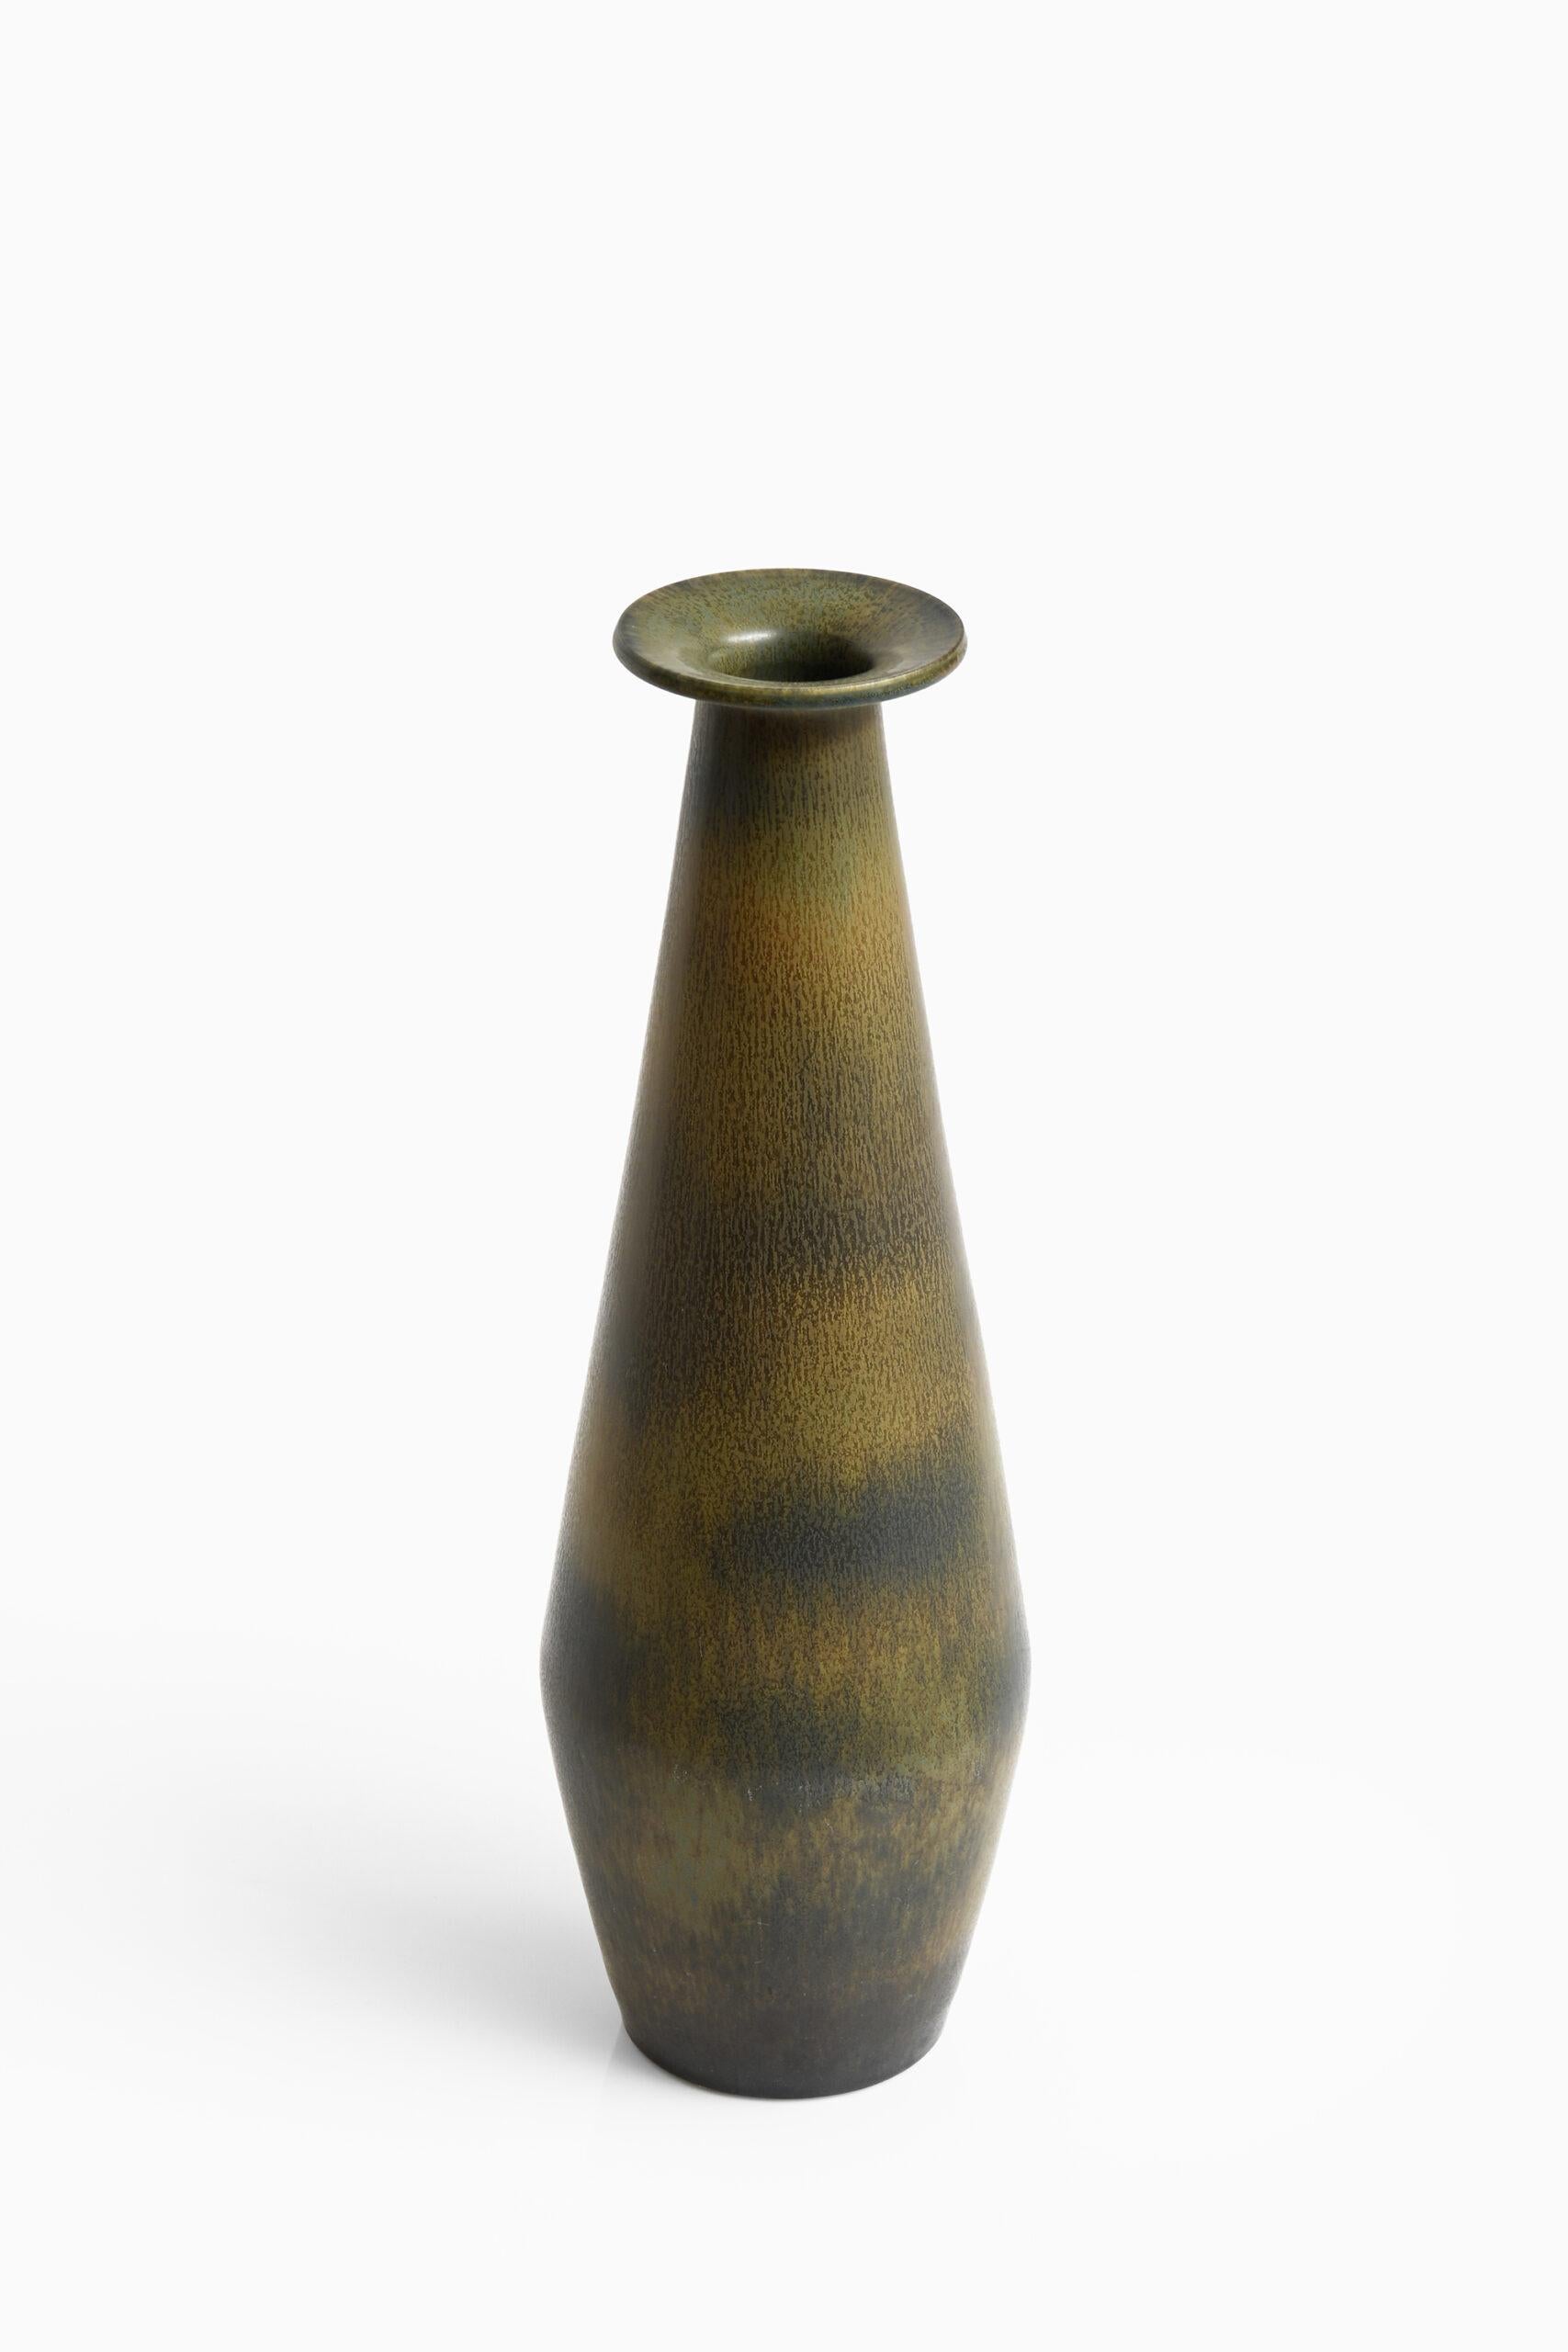 Rare floor vase designed by Gunnar Nylund. Produced by Rörstrand in Sweden.